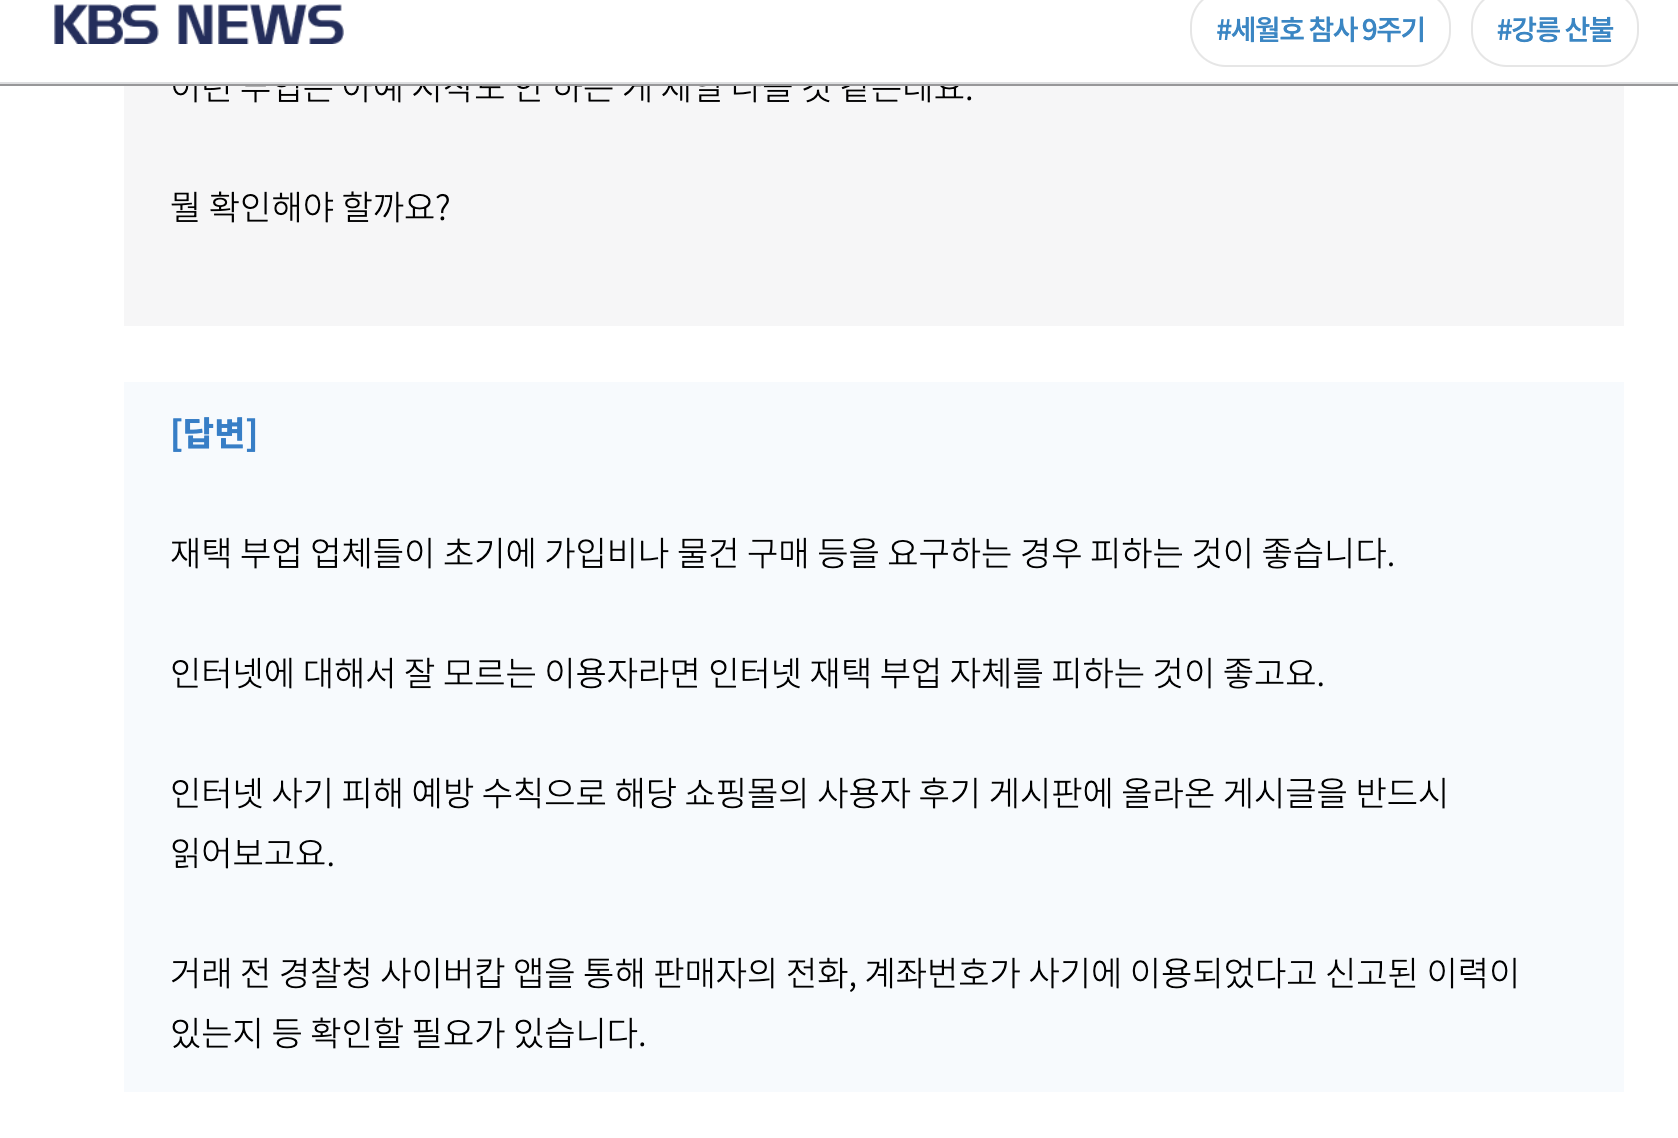 KBS News 부업 초기비용 관련 뉴스기사